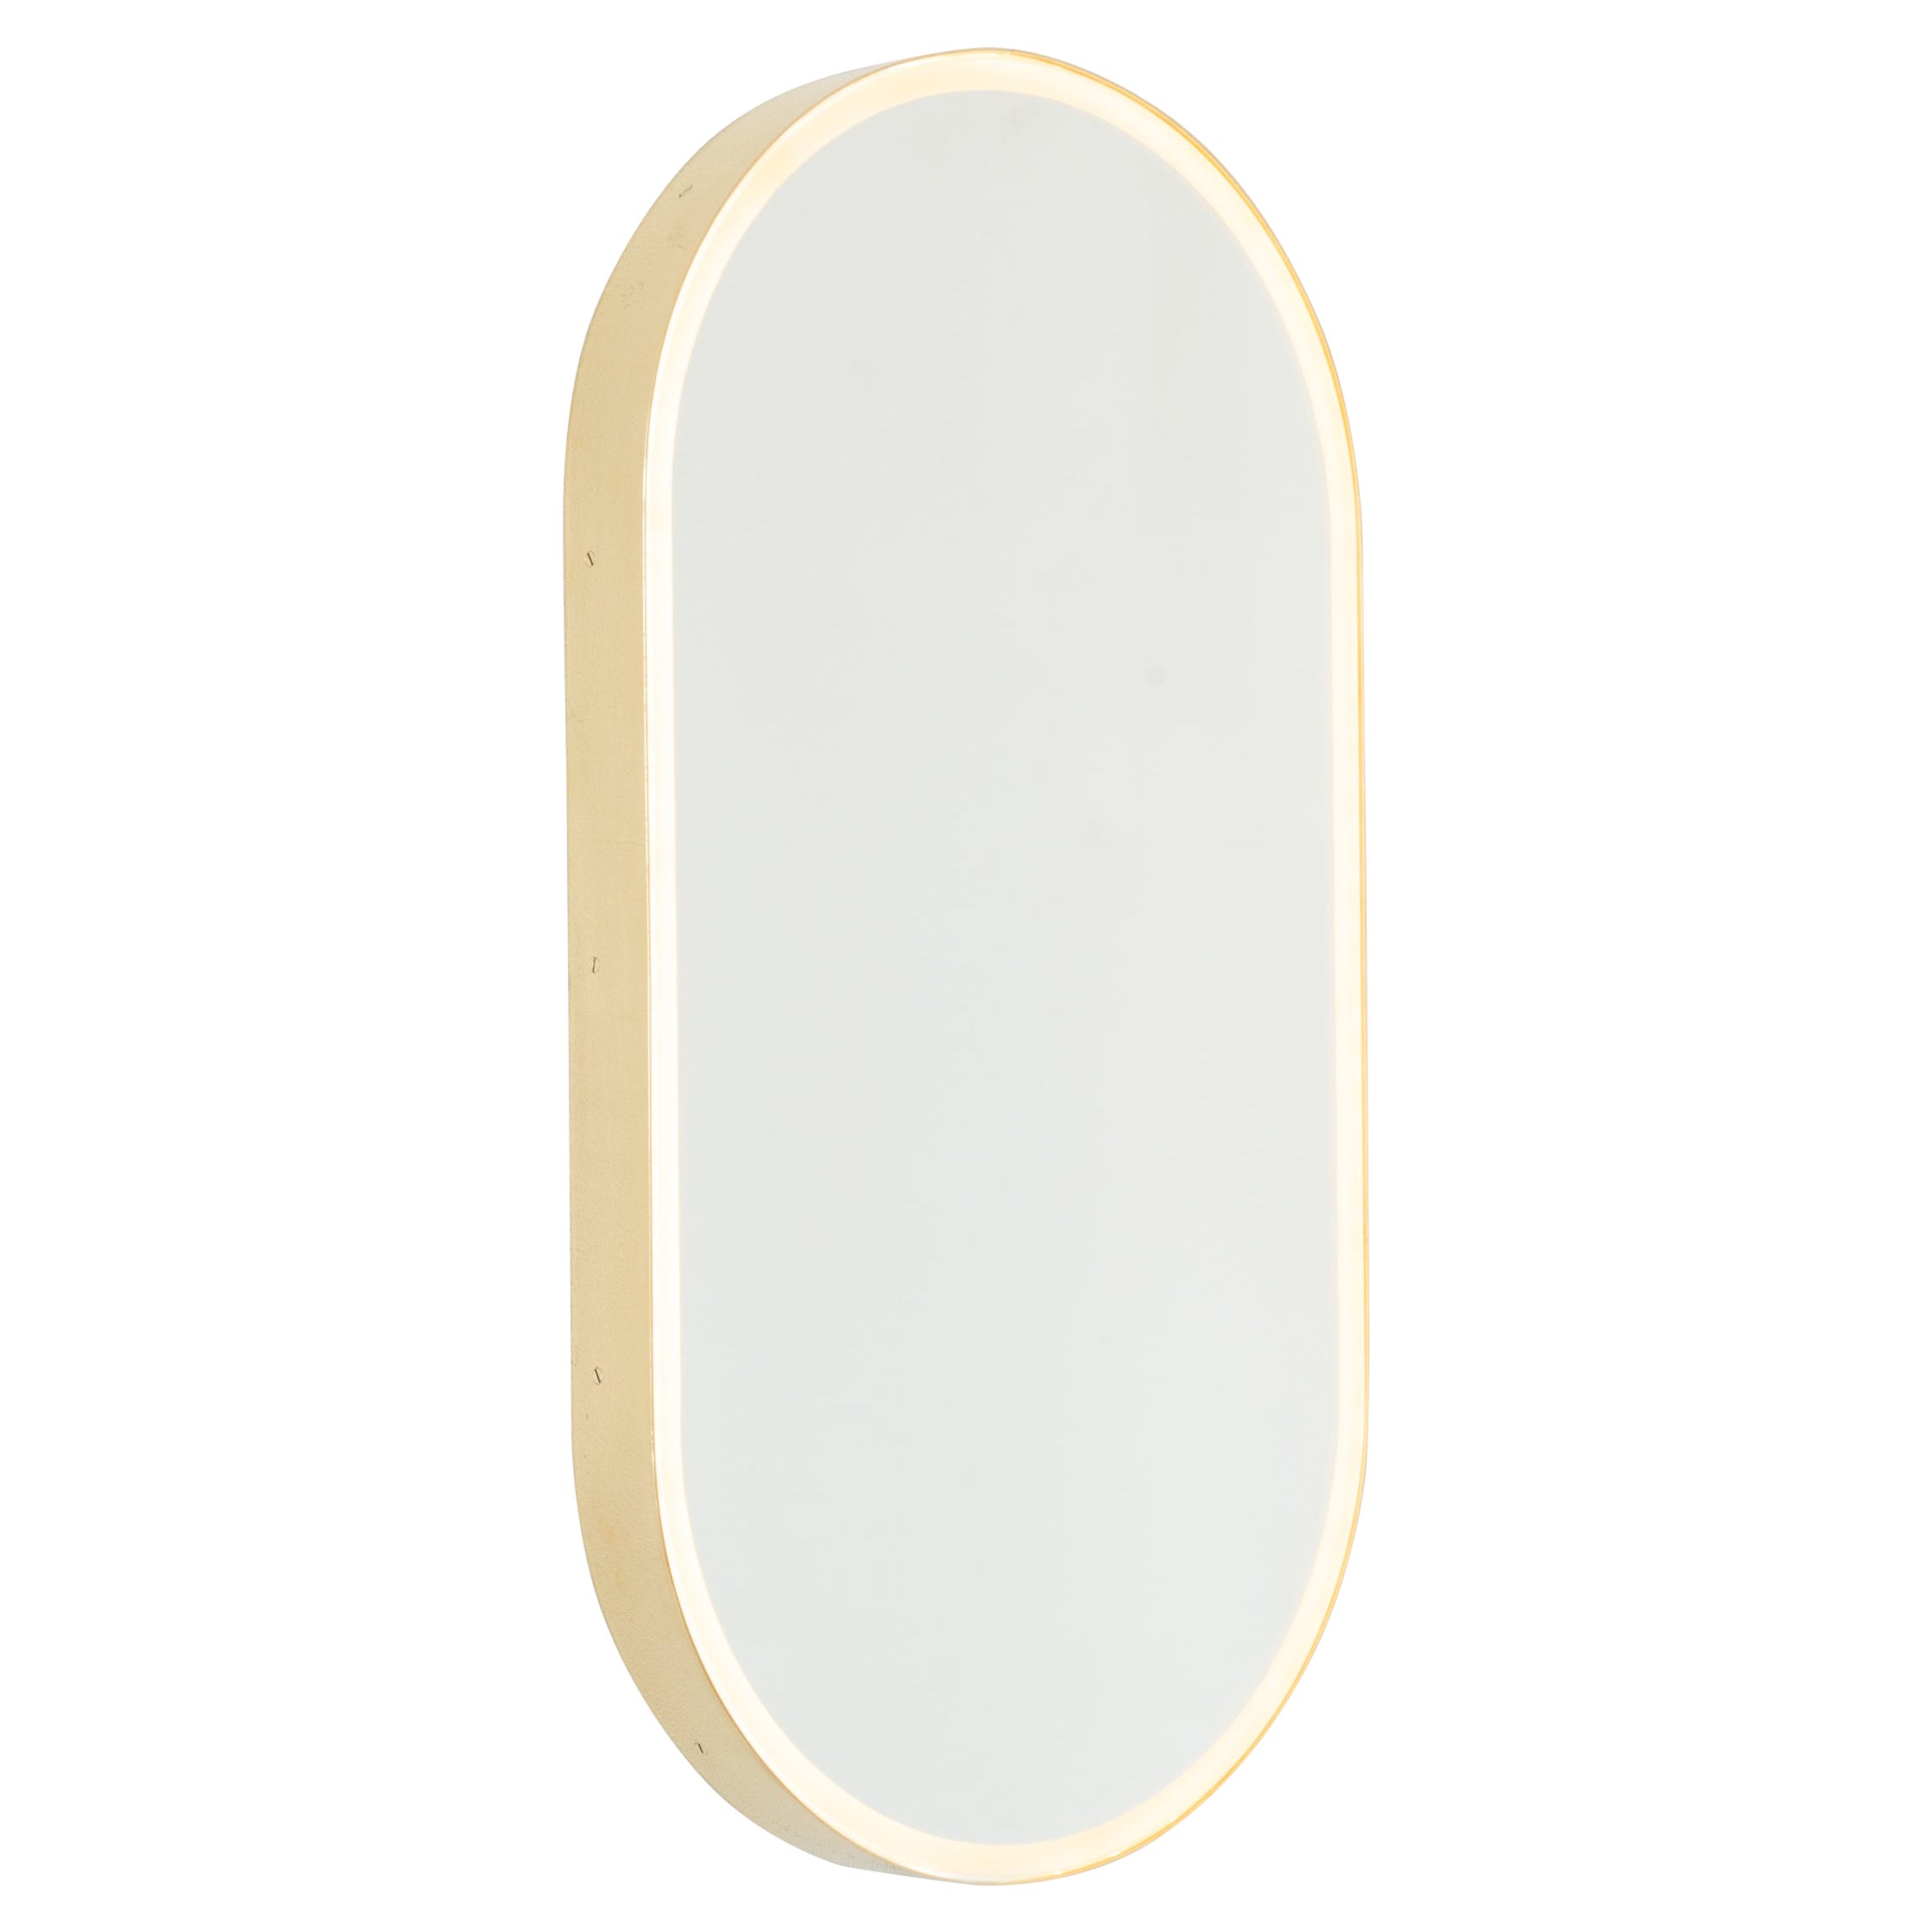 Capsula Illuminated Contemporary Pill Shaped Mirror with Brass Frame, XL